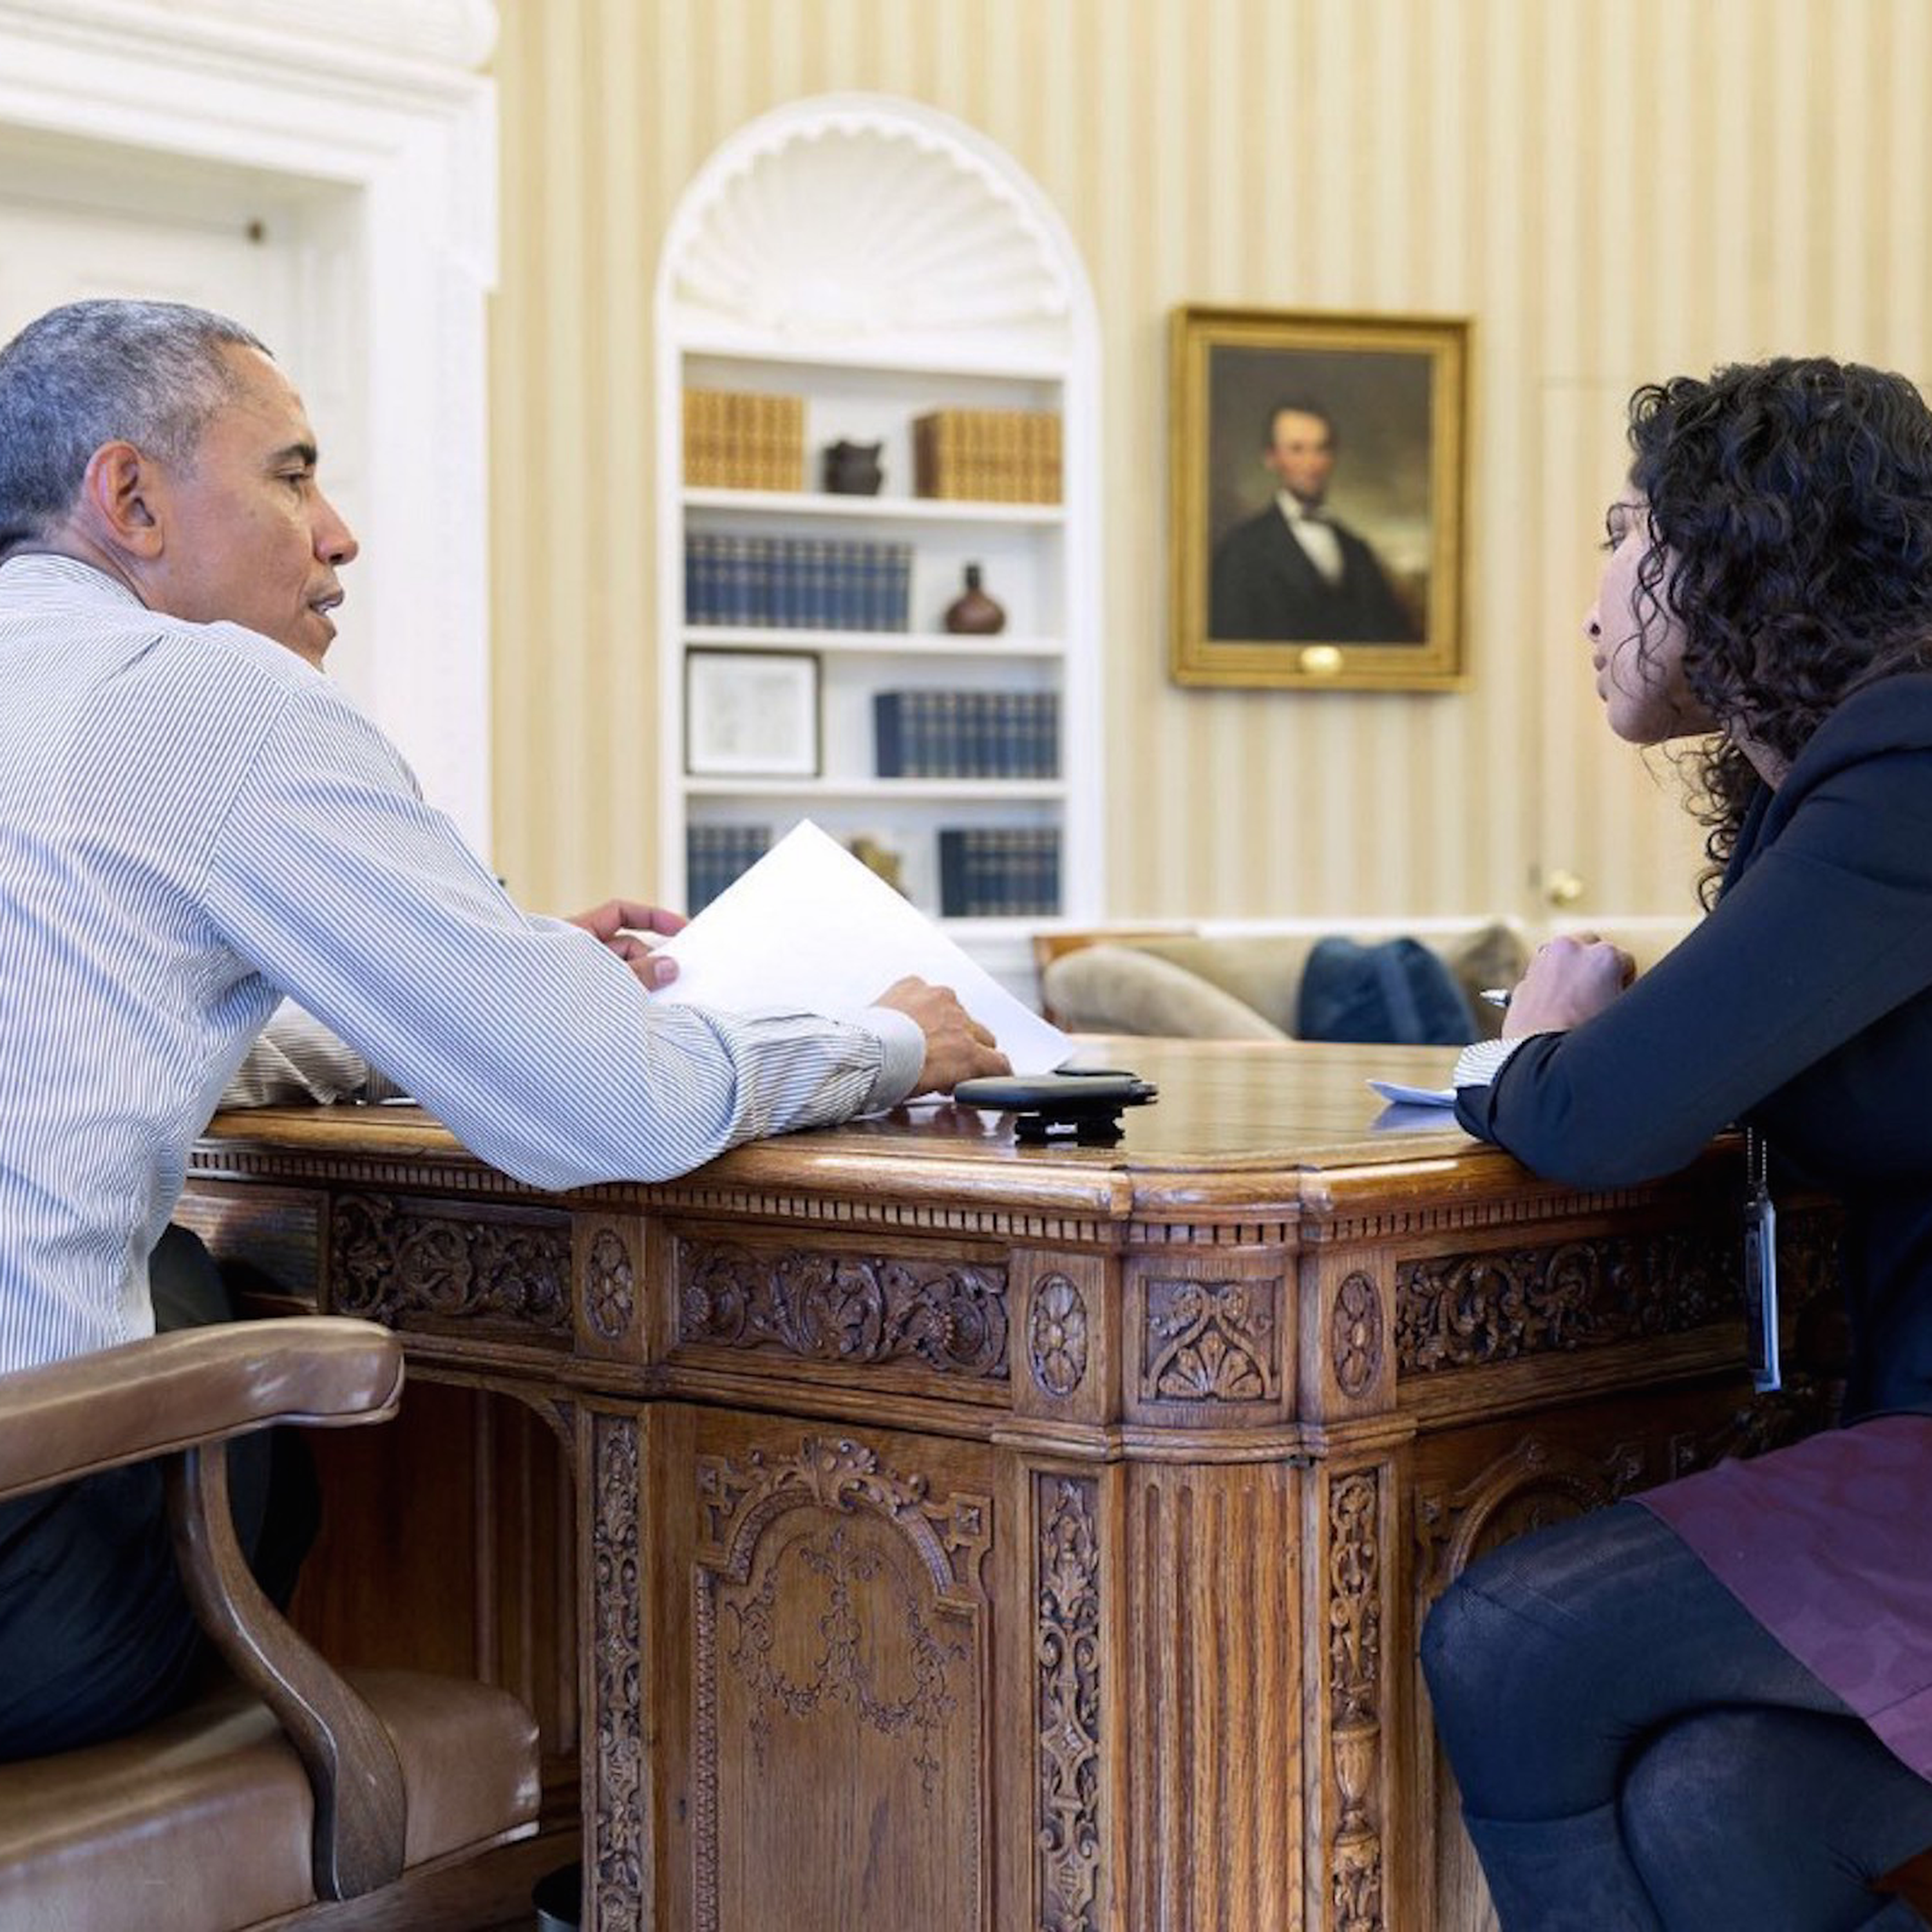 EP: 18 - Sarada Peri - Speechwriter for President Obama and the naturalization ceremony speech.